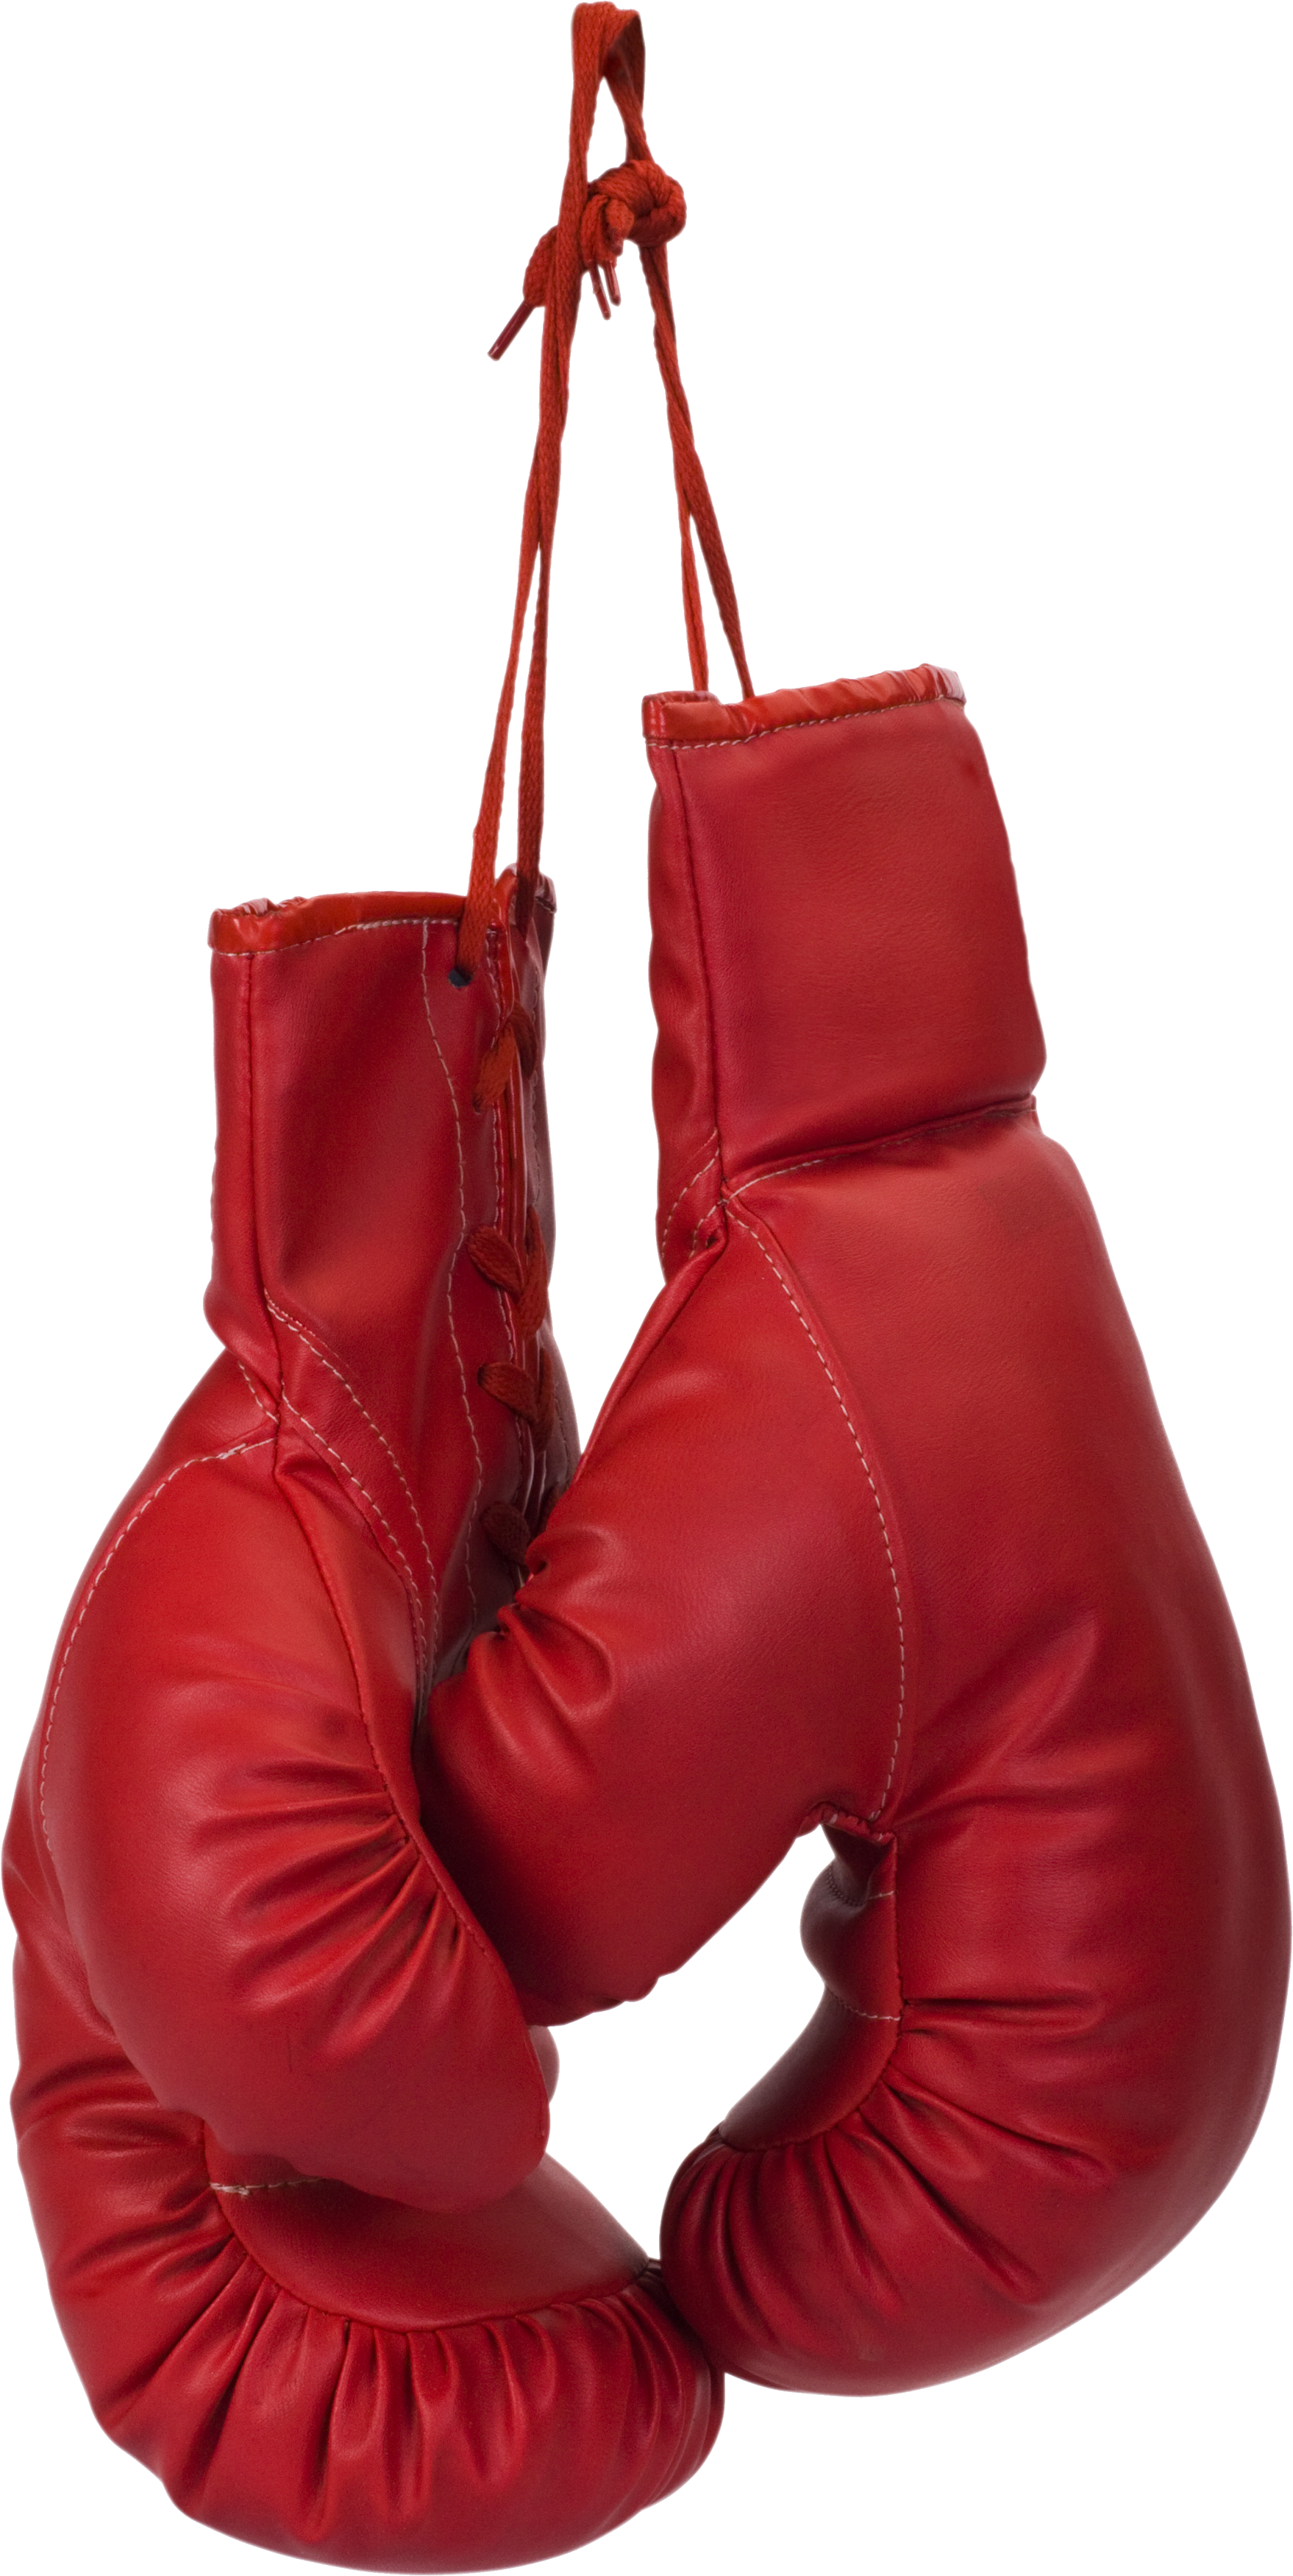 hanging boxing gloves PNG image